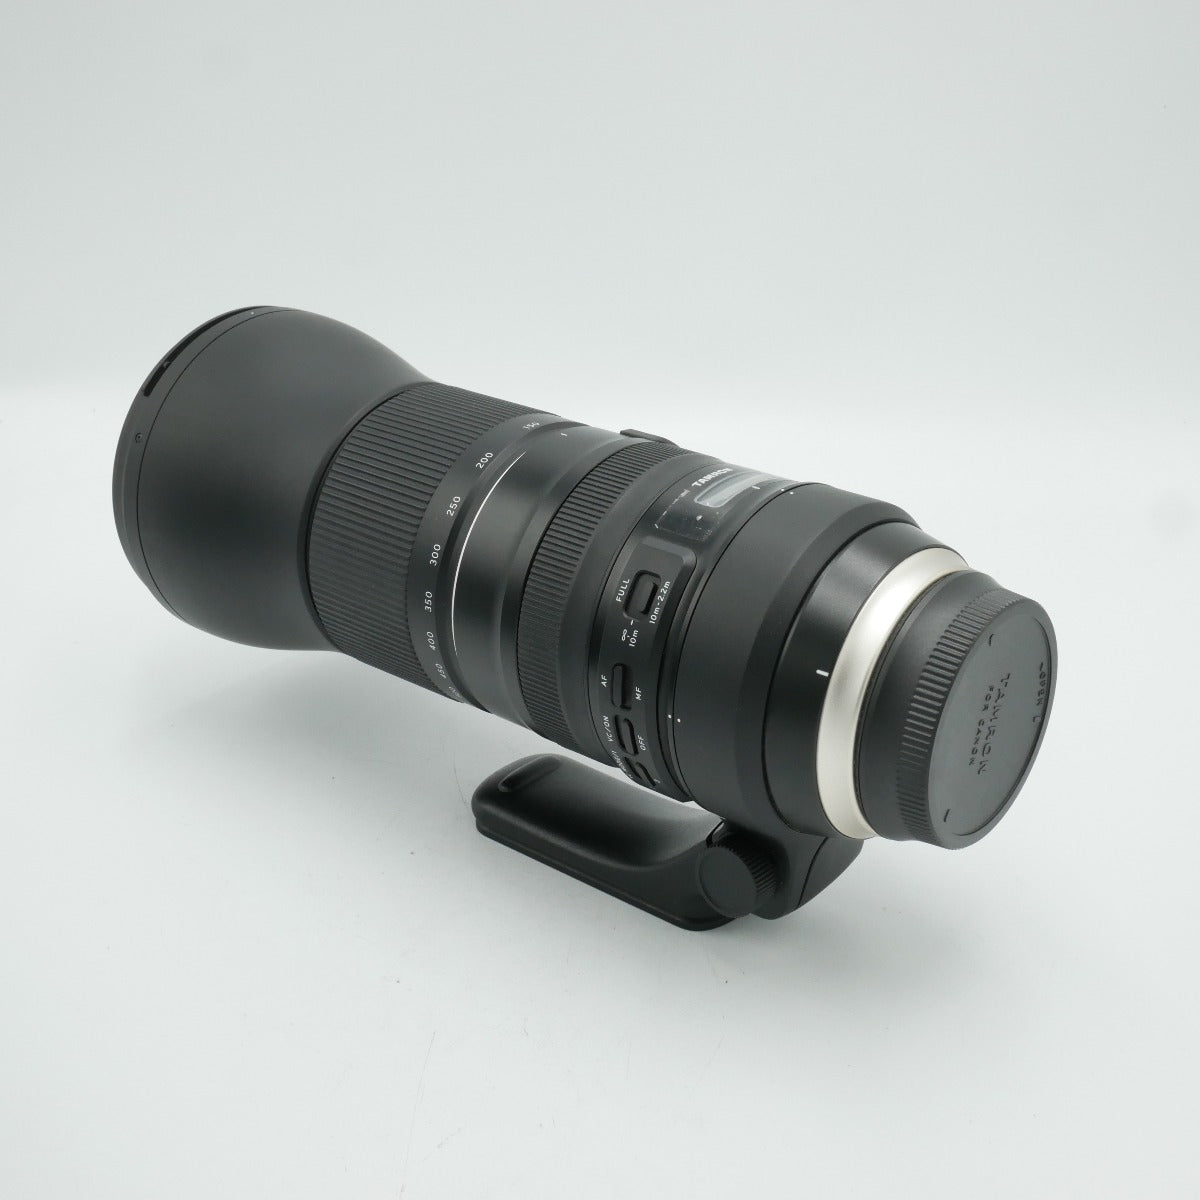 Tamron SP 150-600mm f/5-6.3 Di VC USD G2 - EF mount